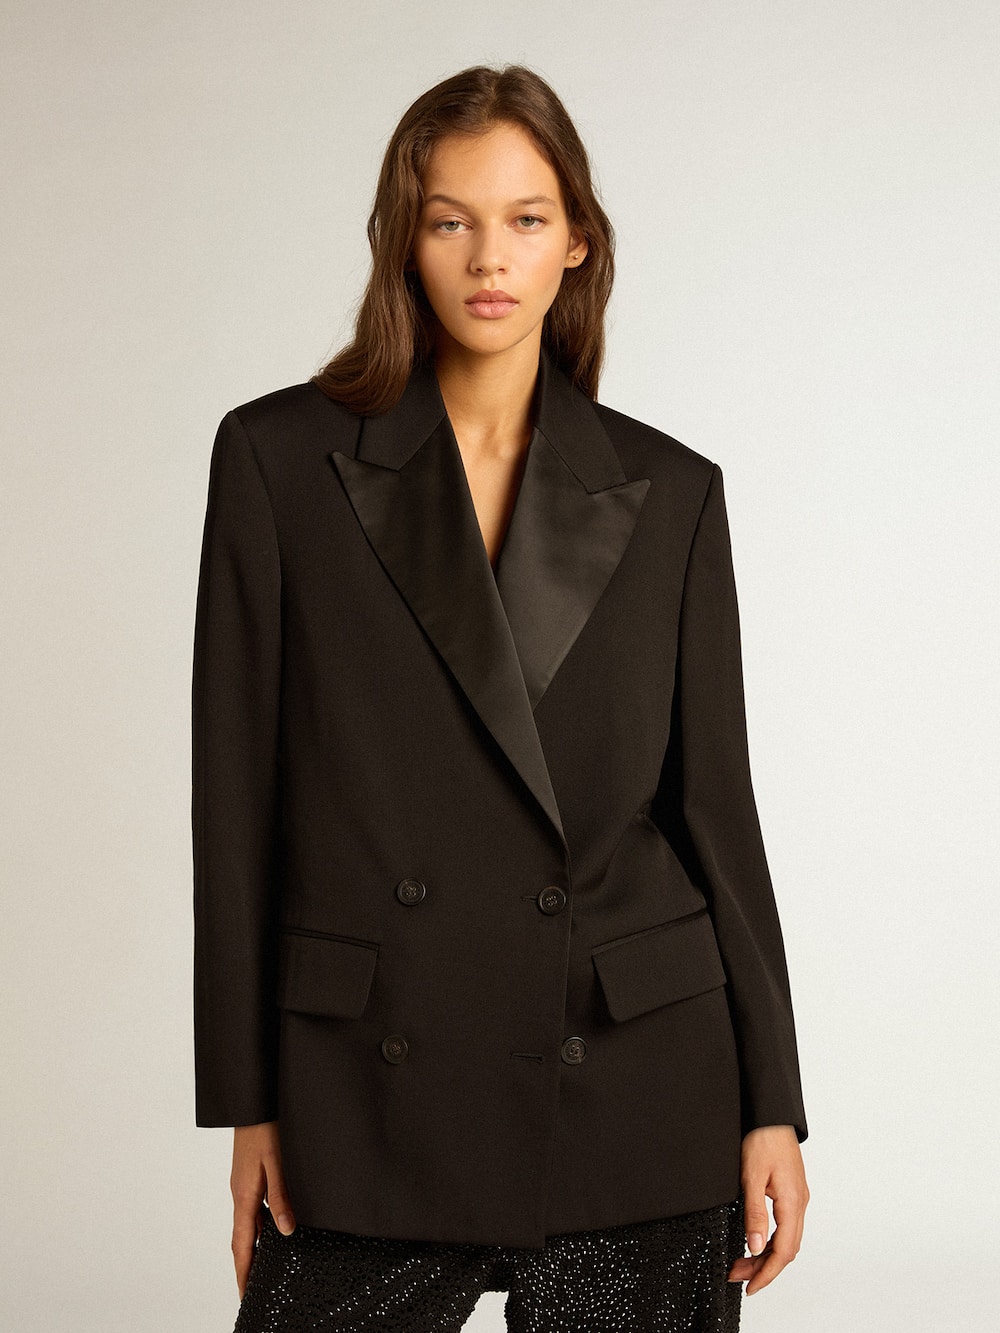 Golden Goose - Women’s tuxedo jacket in black wool gabardine in 